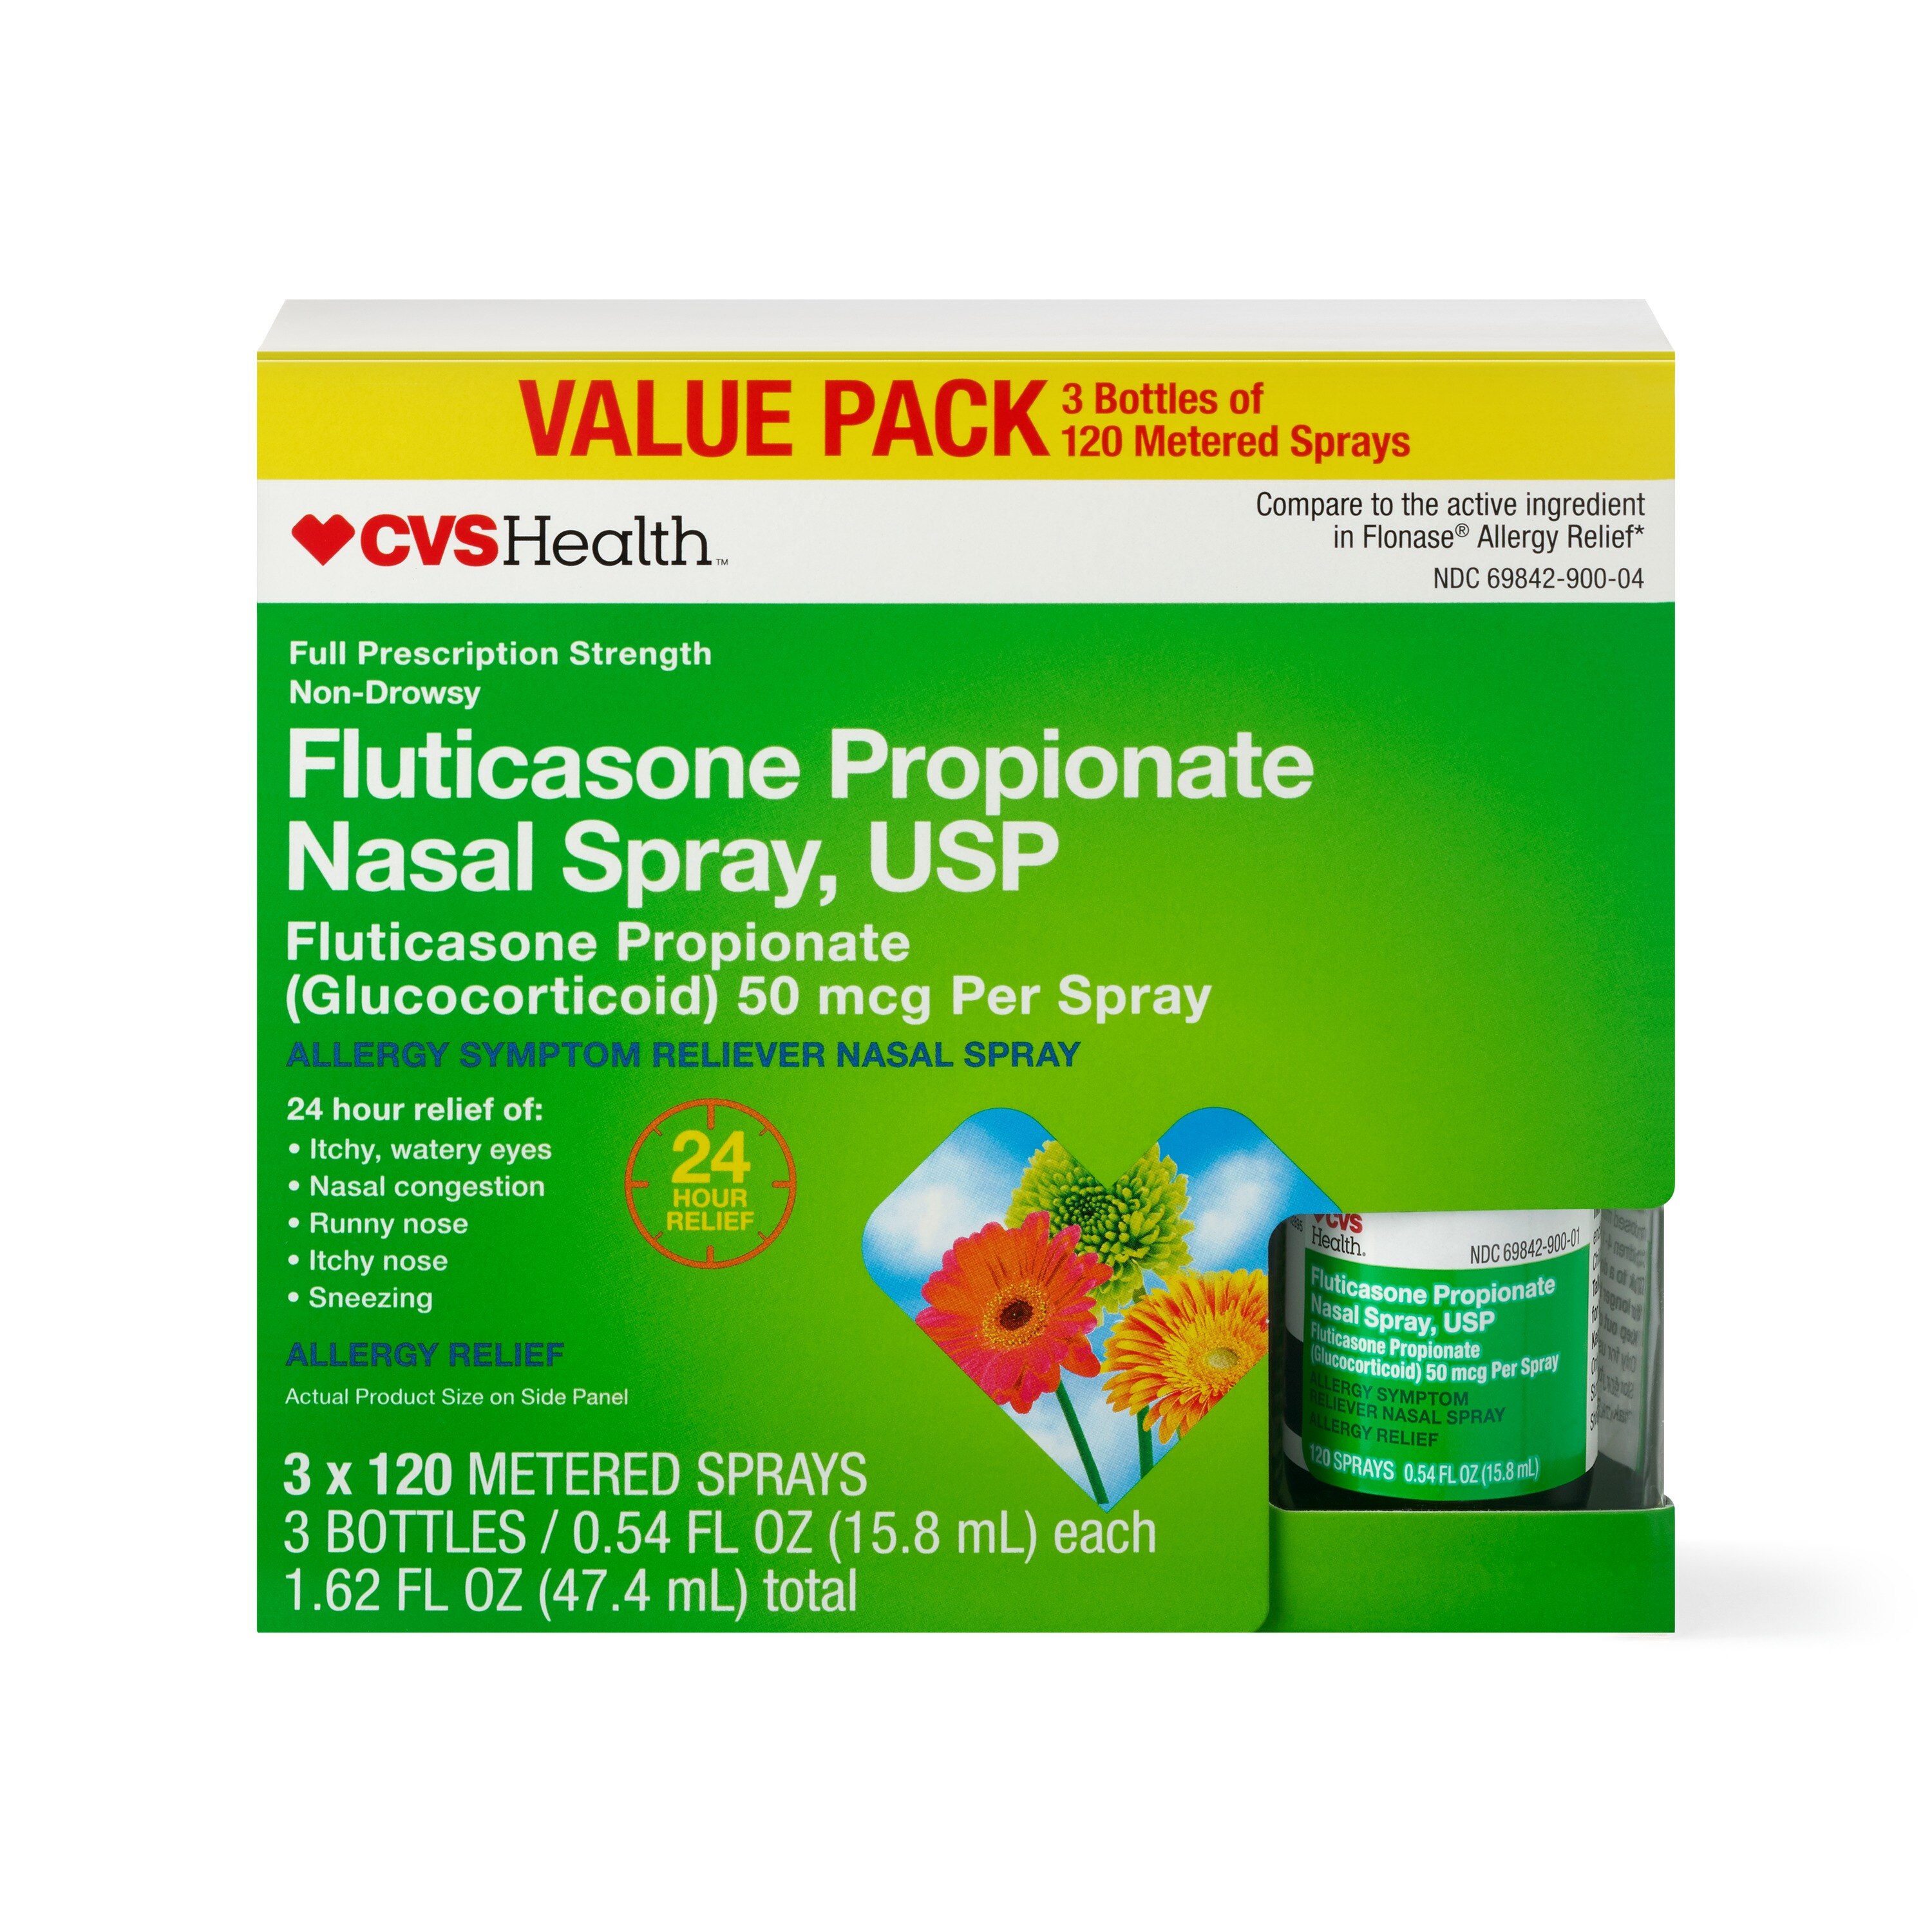 CVS Health Fluticasone Propionate Nasal Spray, USP 50mcg, Value Pack Of 120 Sprays/bottle - 0.54 Oz